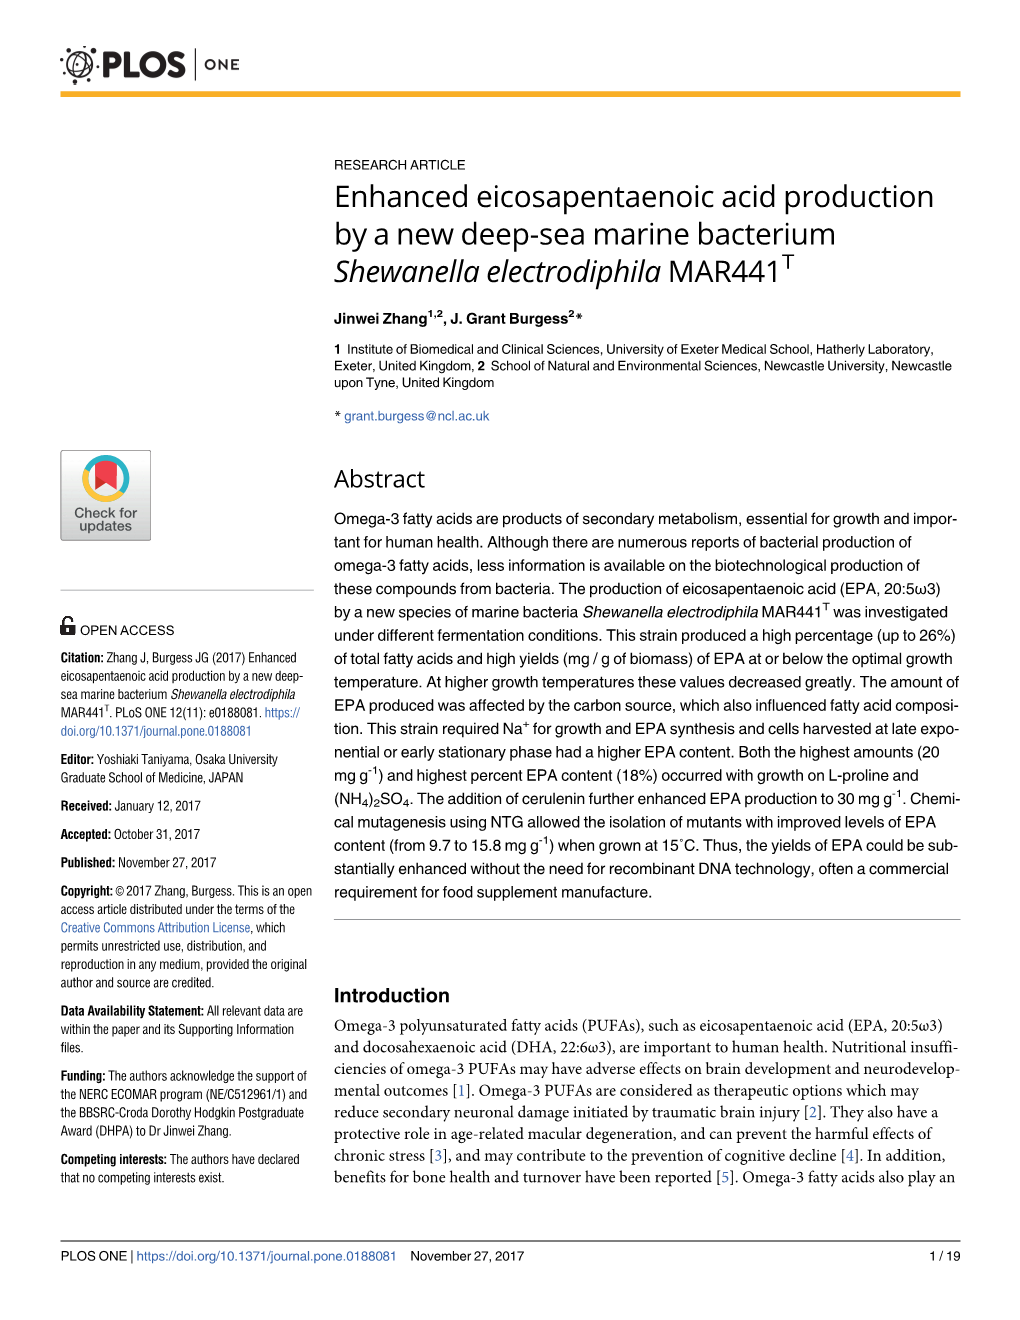 Enhanced Eicosapentaenoic Acid Production by a New Deep-Sea Marine Bacterium Shewanella Electrodiphila MAR441T